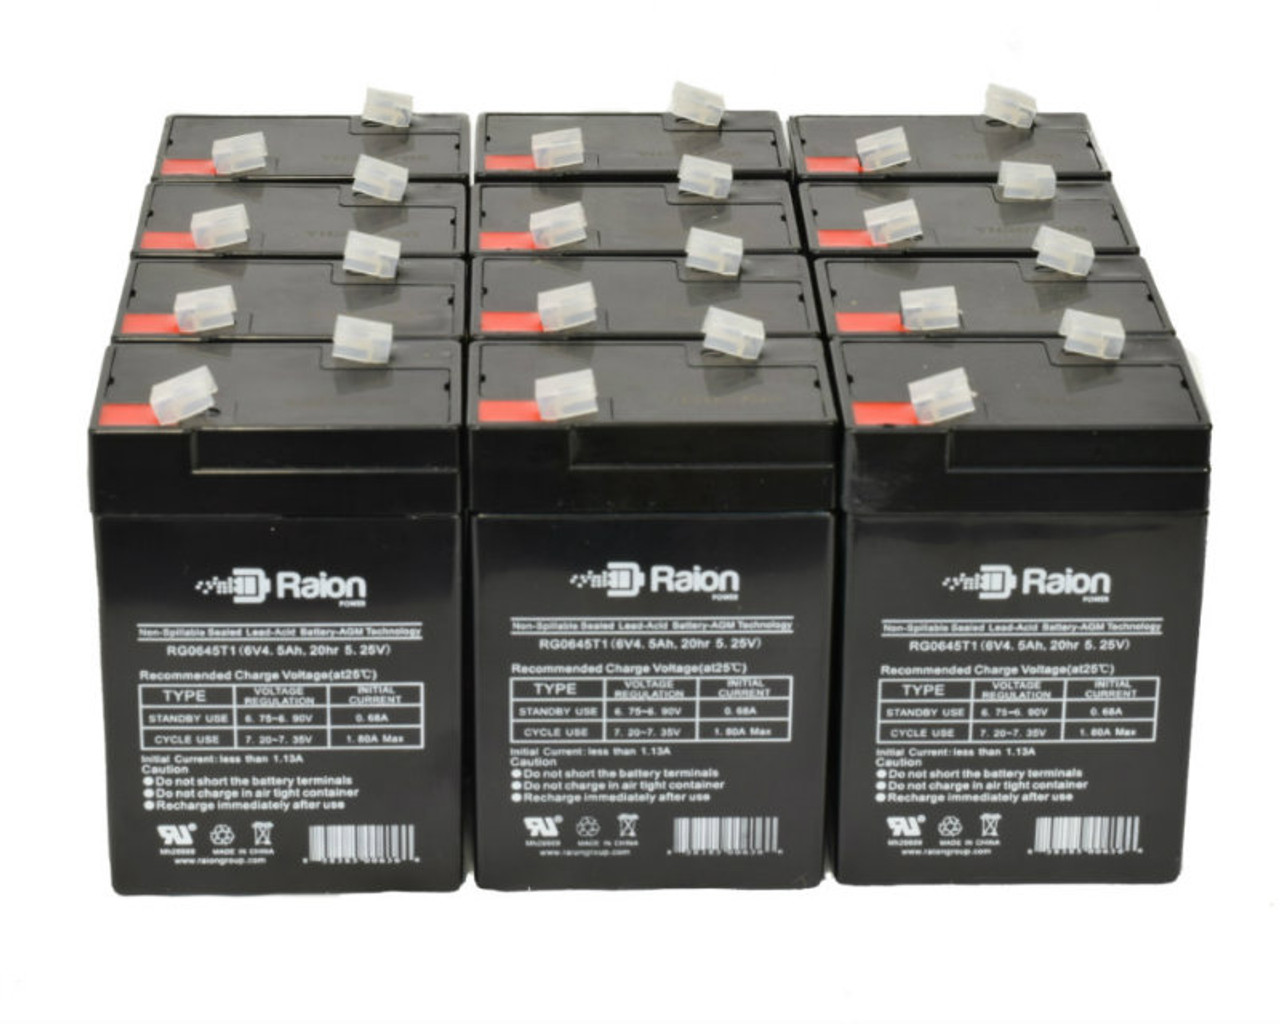 Raion Power 6V 4.5Ah Replacement Emergency Light Battery for Sonnenschein 103101 - 12 Pack